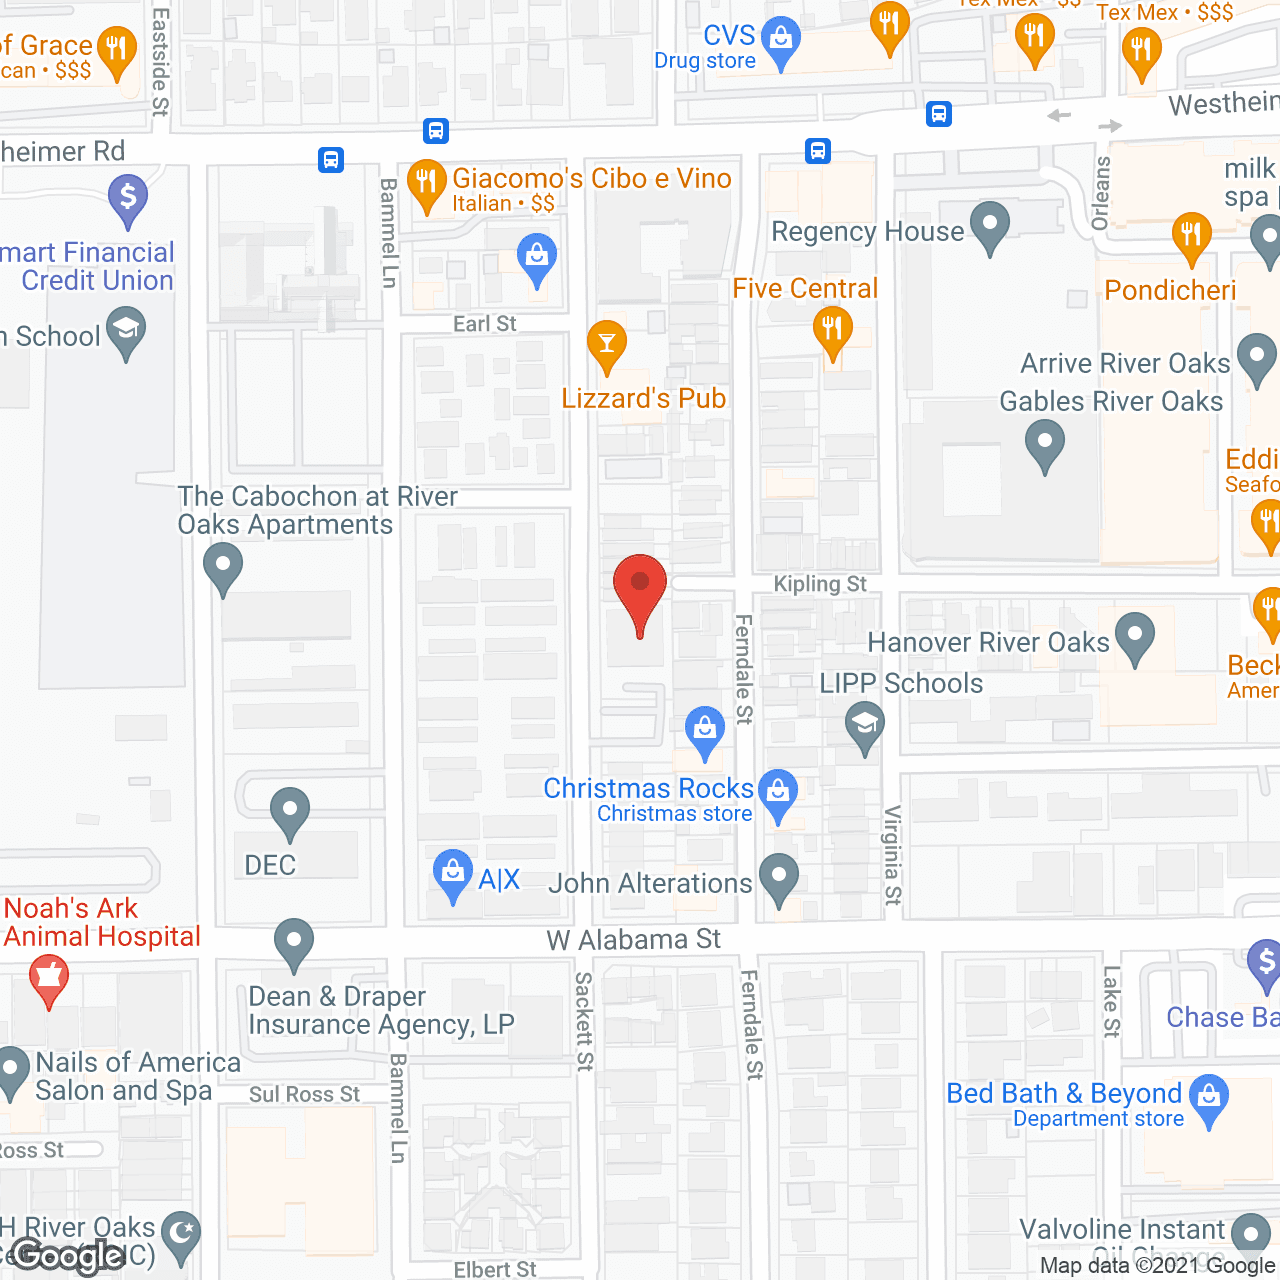 Visiting Nurse Assoc in google map